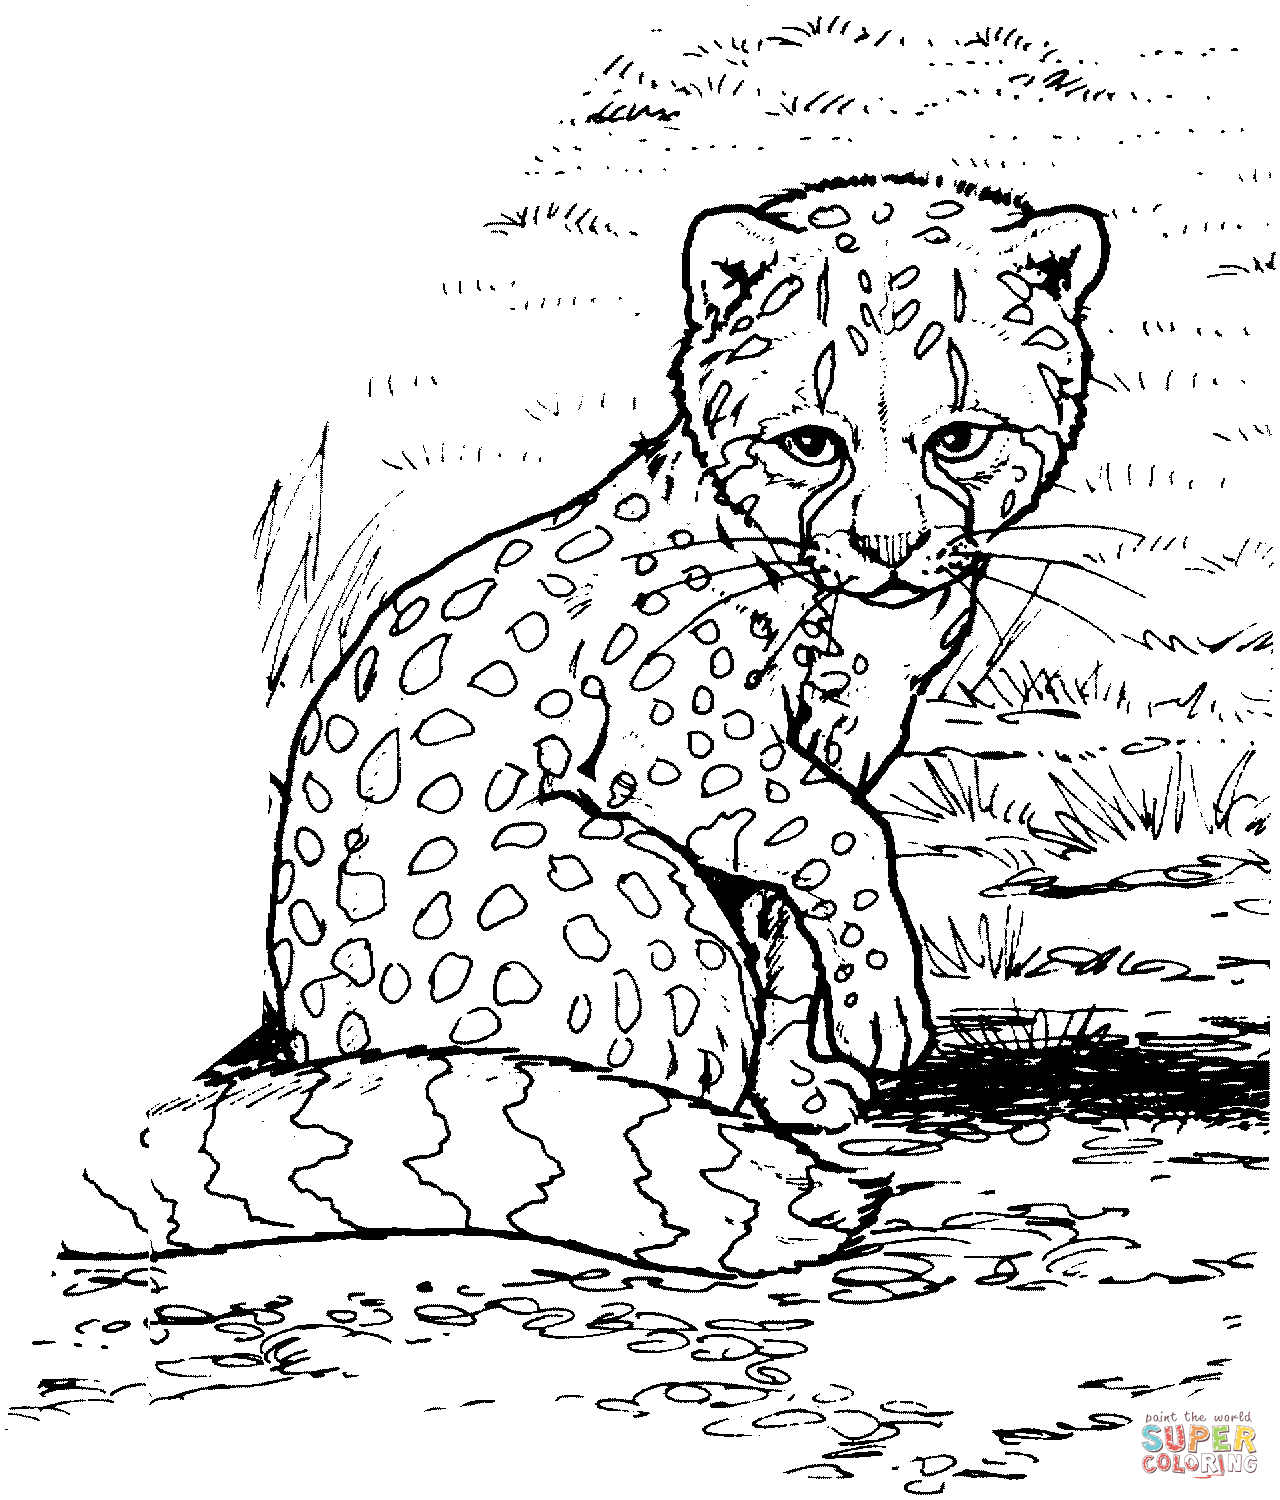 Cheetah coloring pages | SuperColoring.com